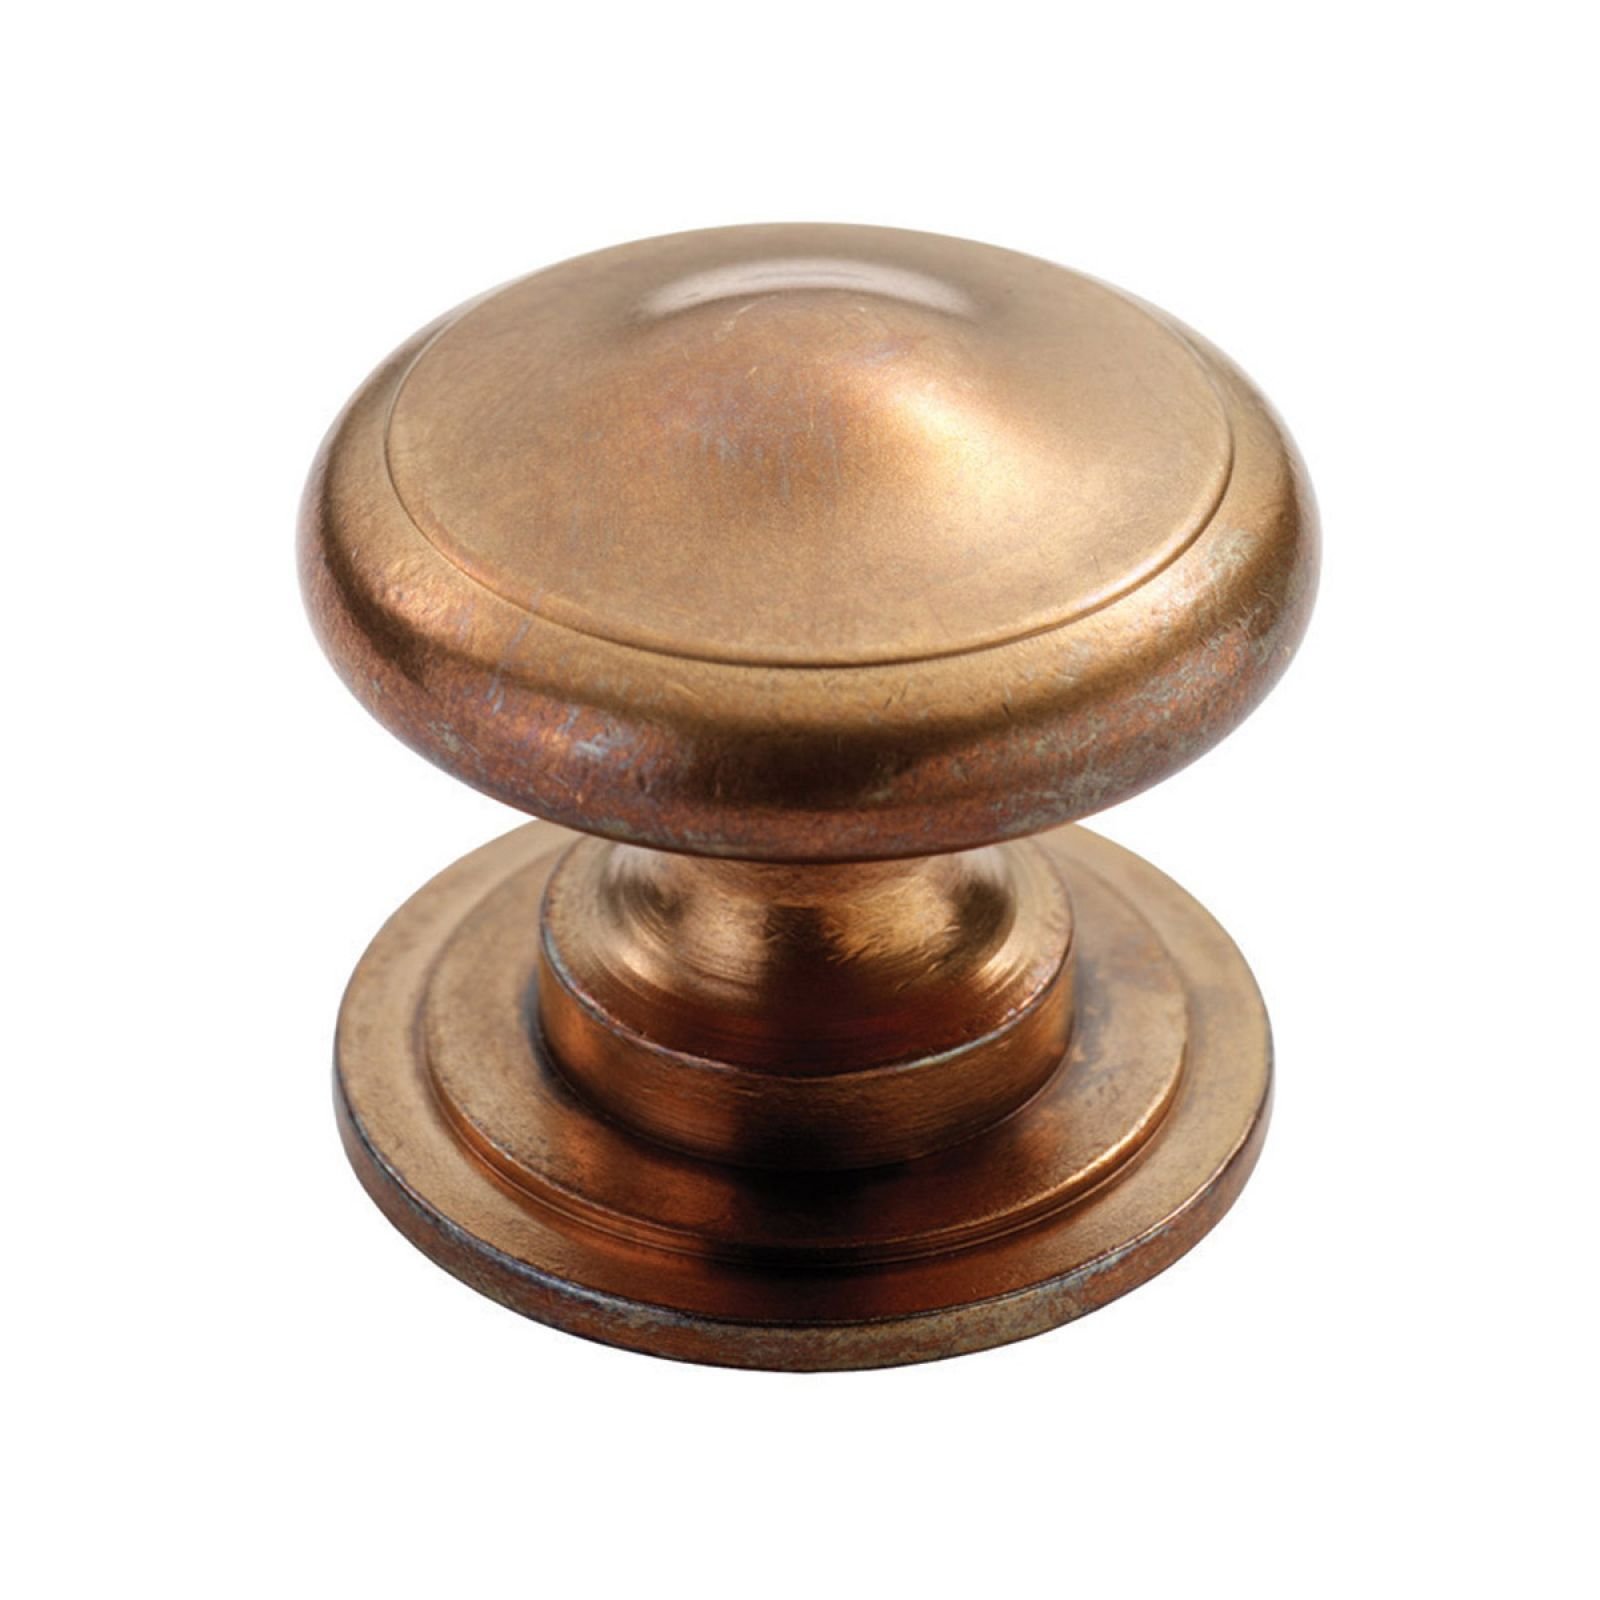 Solid bronze cupboard knob